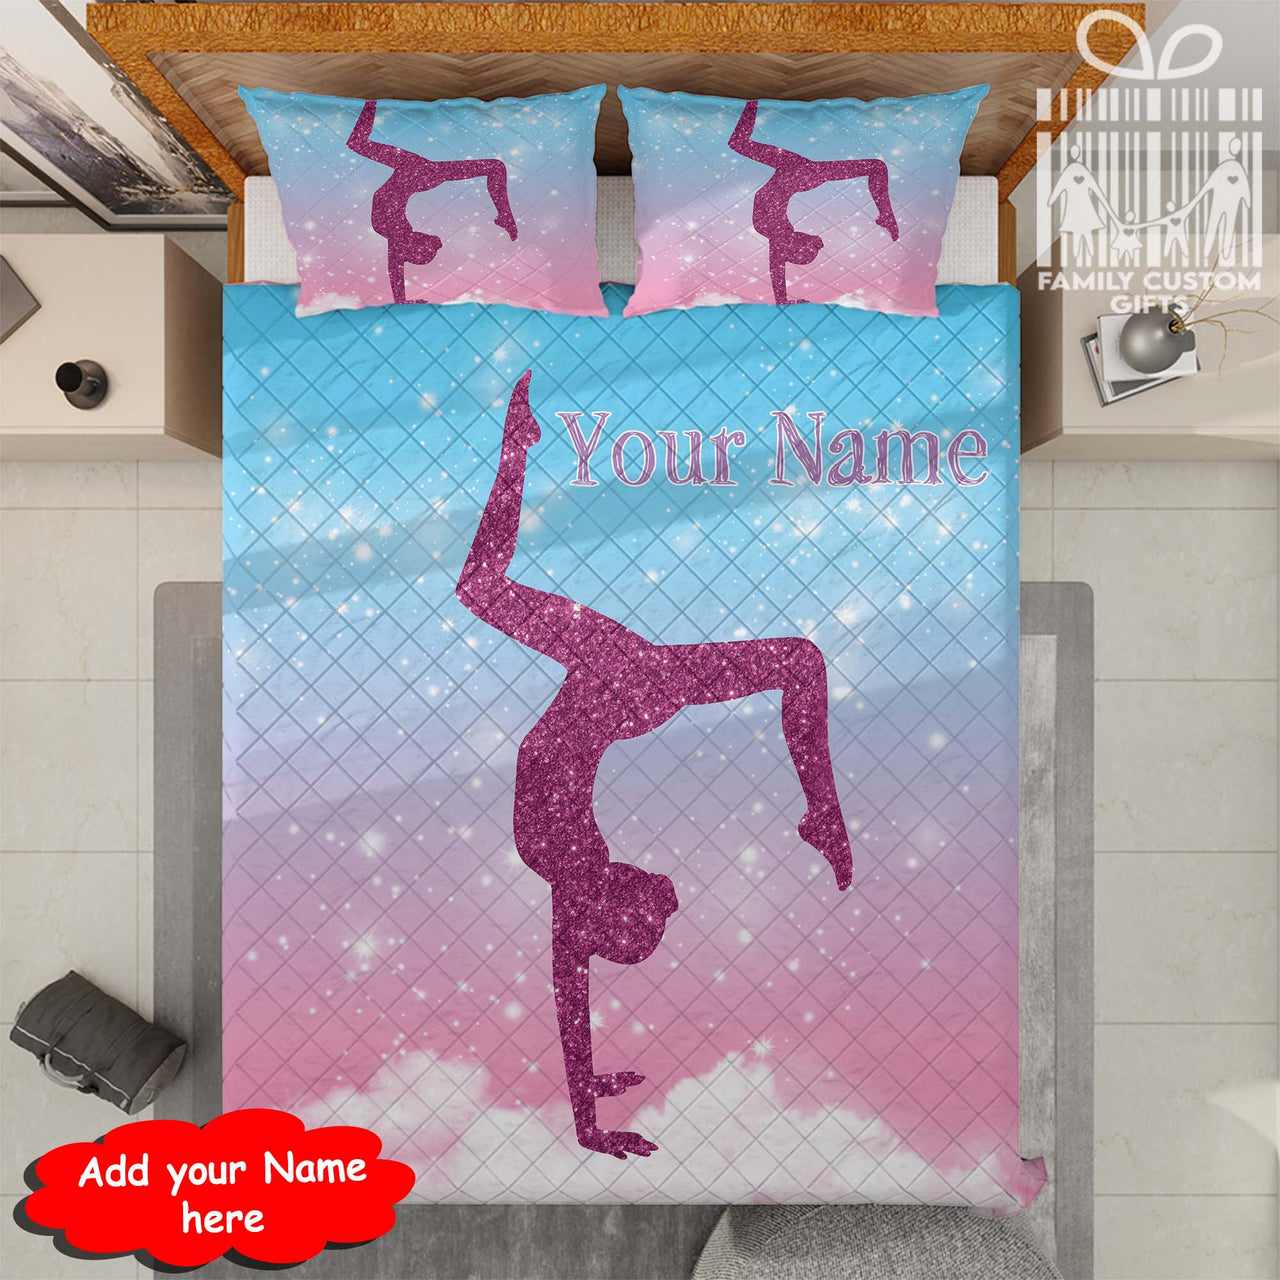 Custom Quilt Sets Gymnastics Leap Pastel Premium Quilt Bedding for Boys Girls Men Women